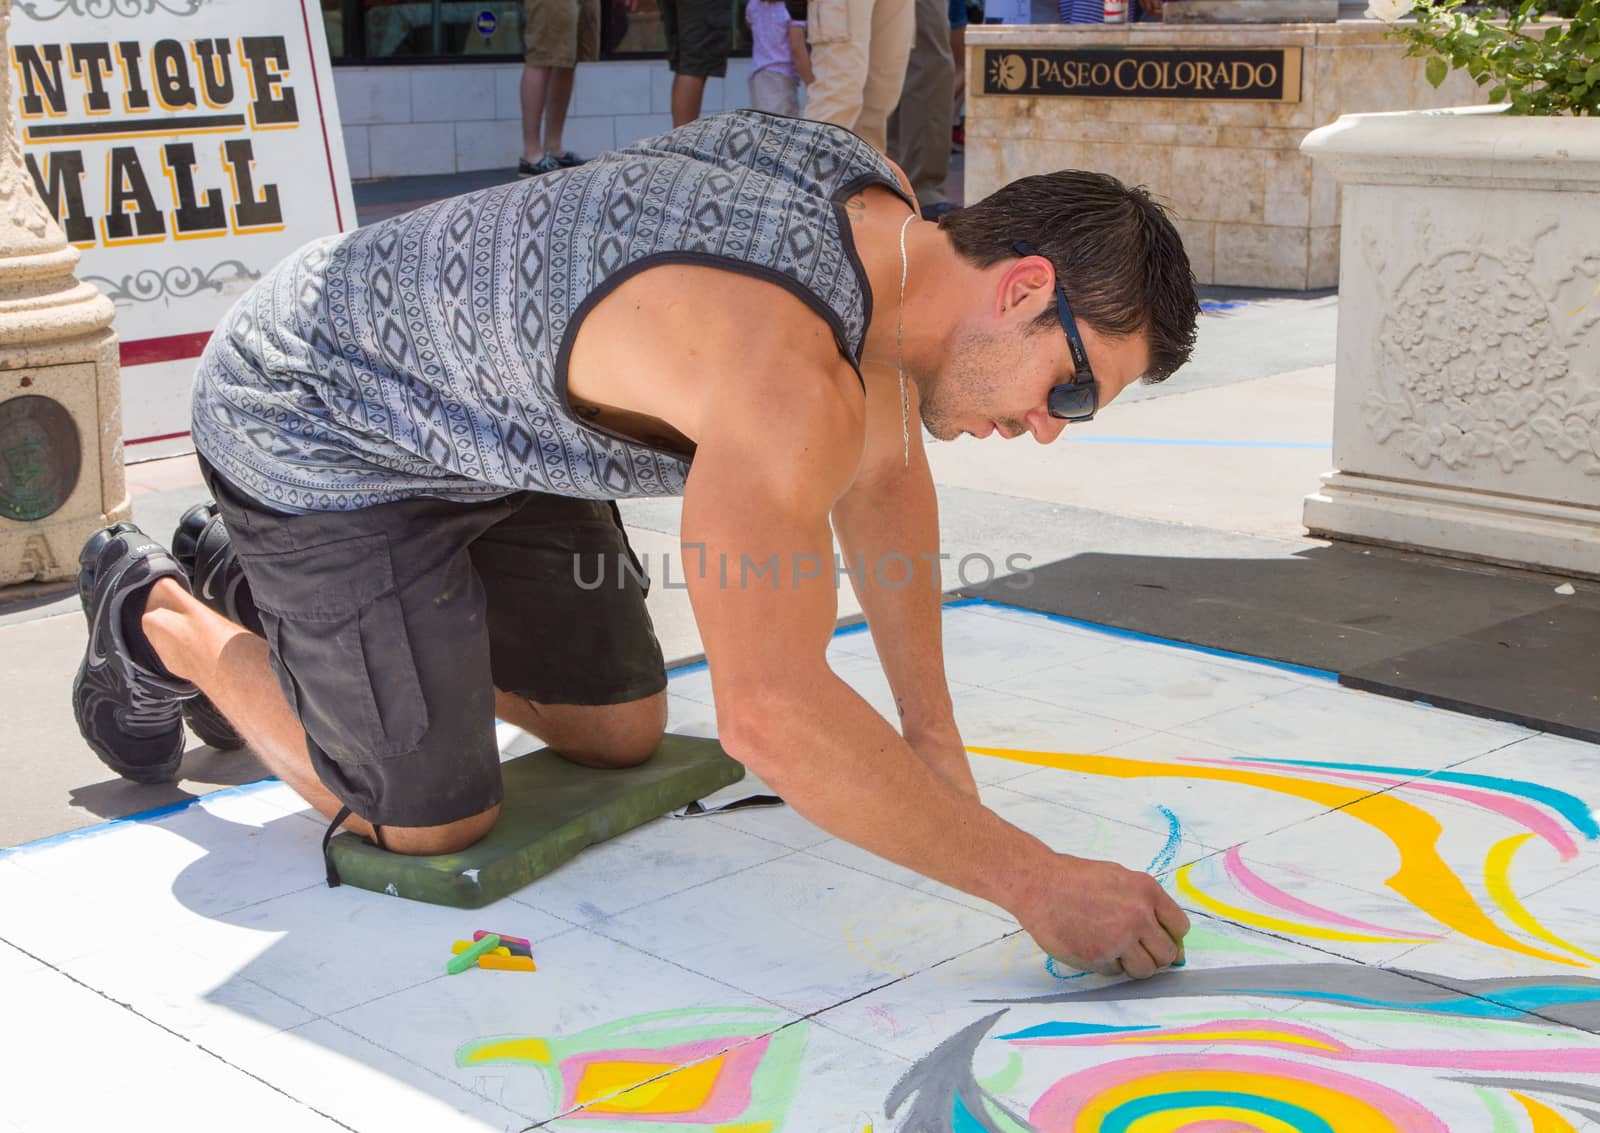 PASADENA, CA/USA - JUNE 21, 2015: Unidentified artist participating in the 2015 Pasadena Chalk Festival at Paseo Colorado.